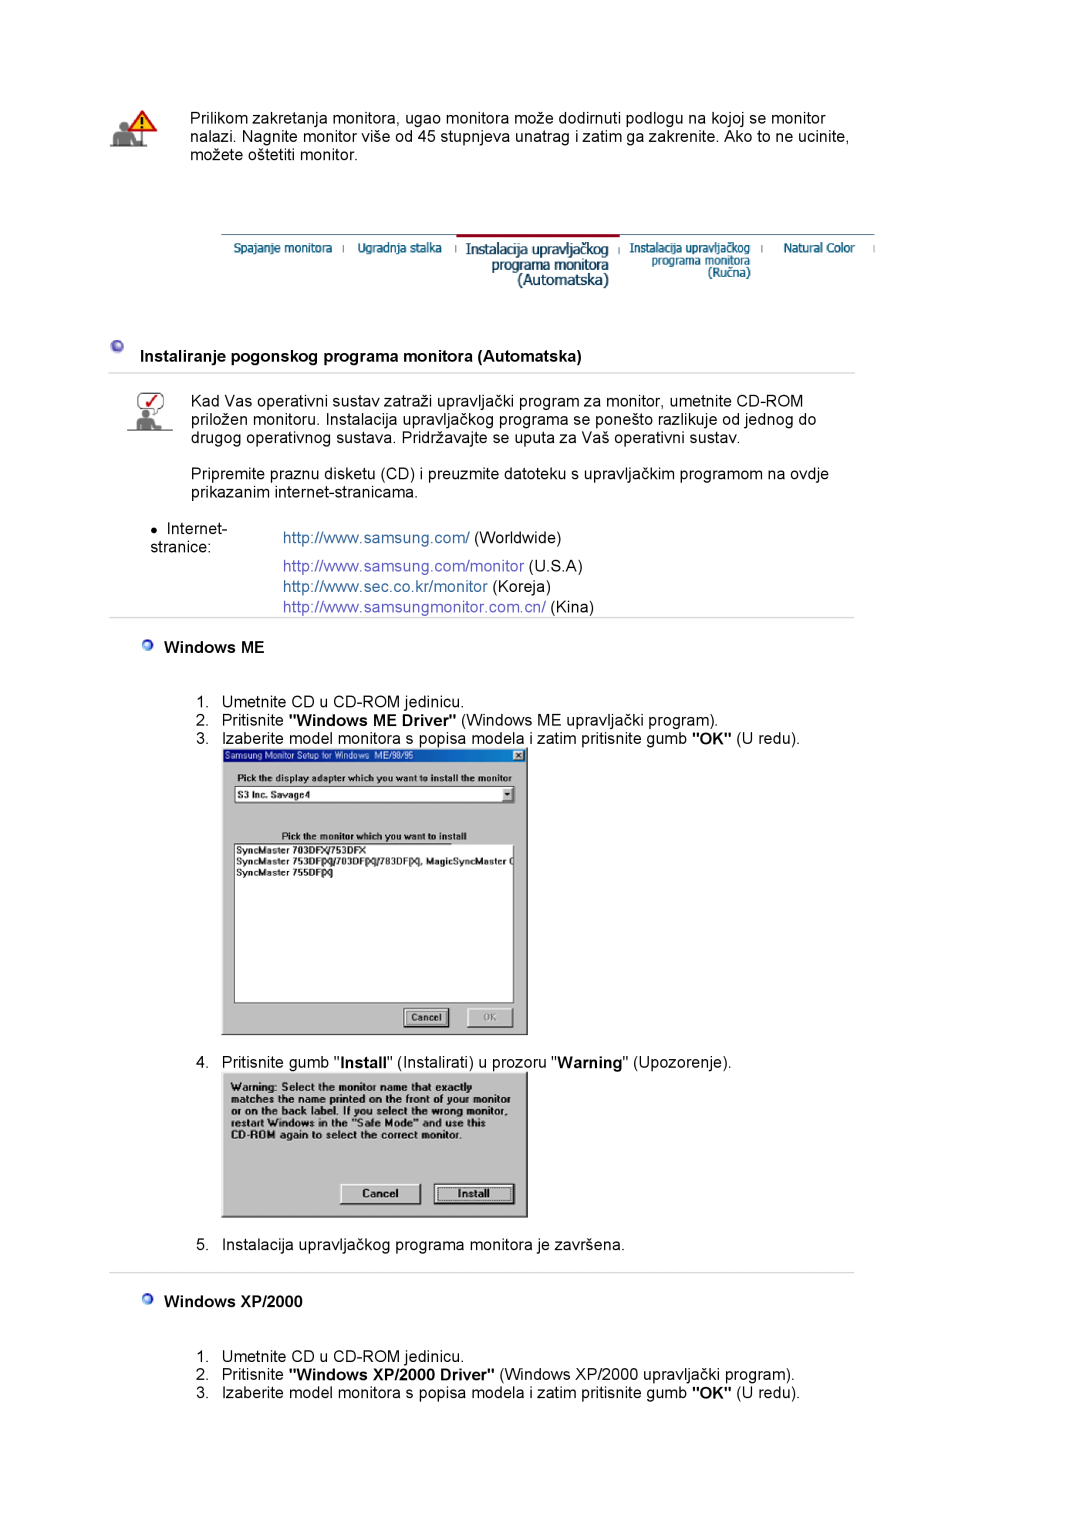 Samsung LS17HJDQFV/EDC, LS17HJDQHV/EDC Instaliranje pogonskog programa monitora Automatska, Windows ME, Windows XP/2000 